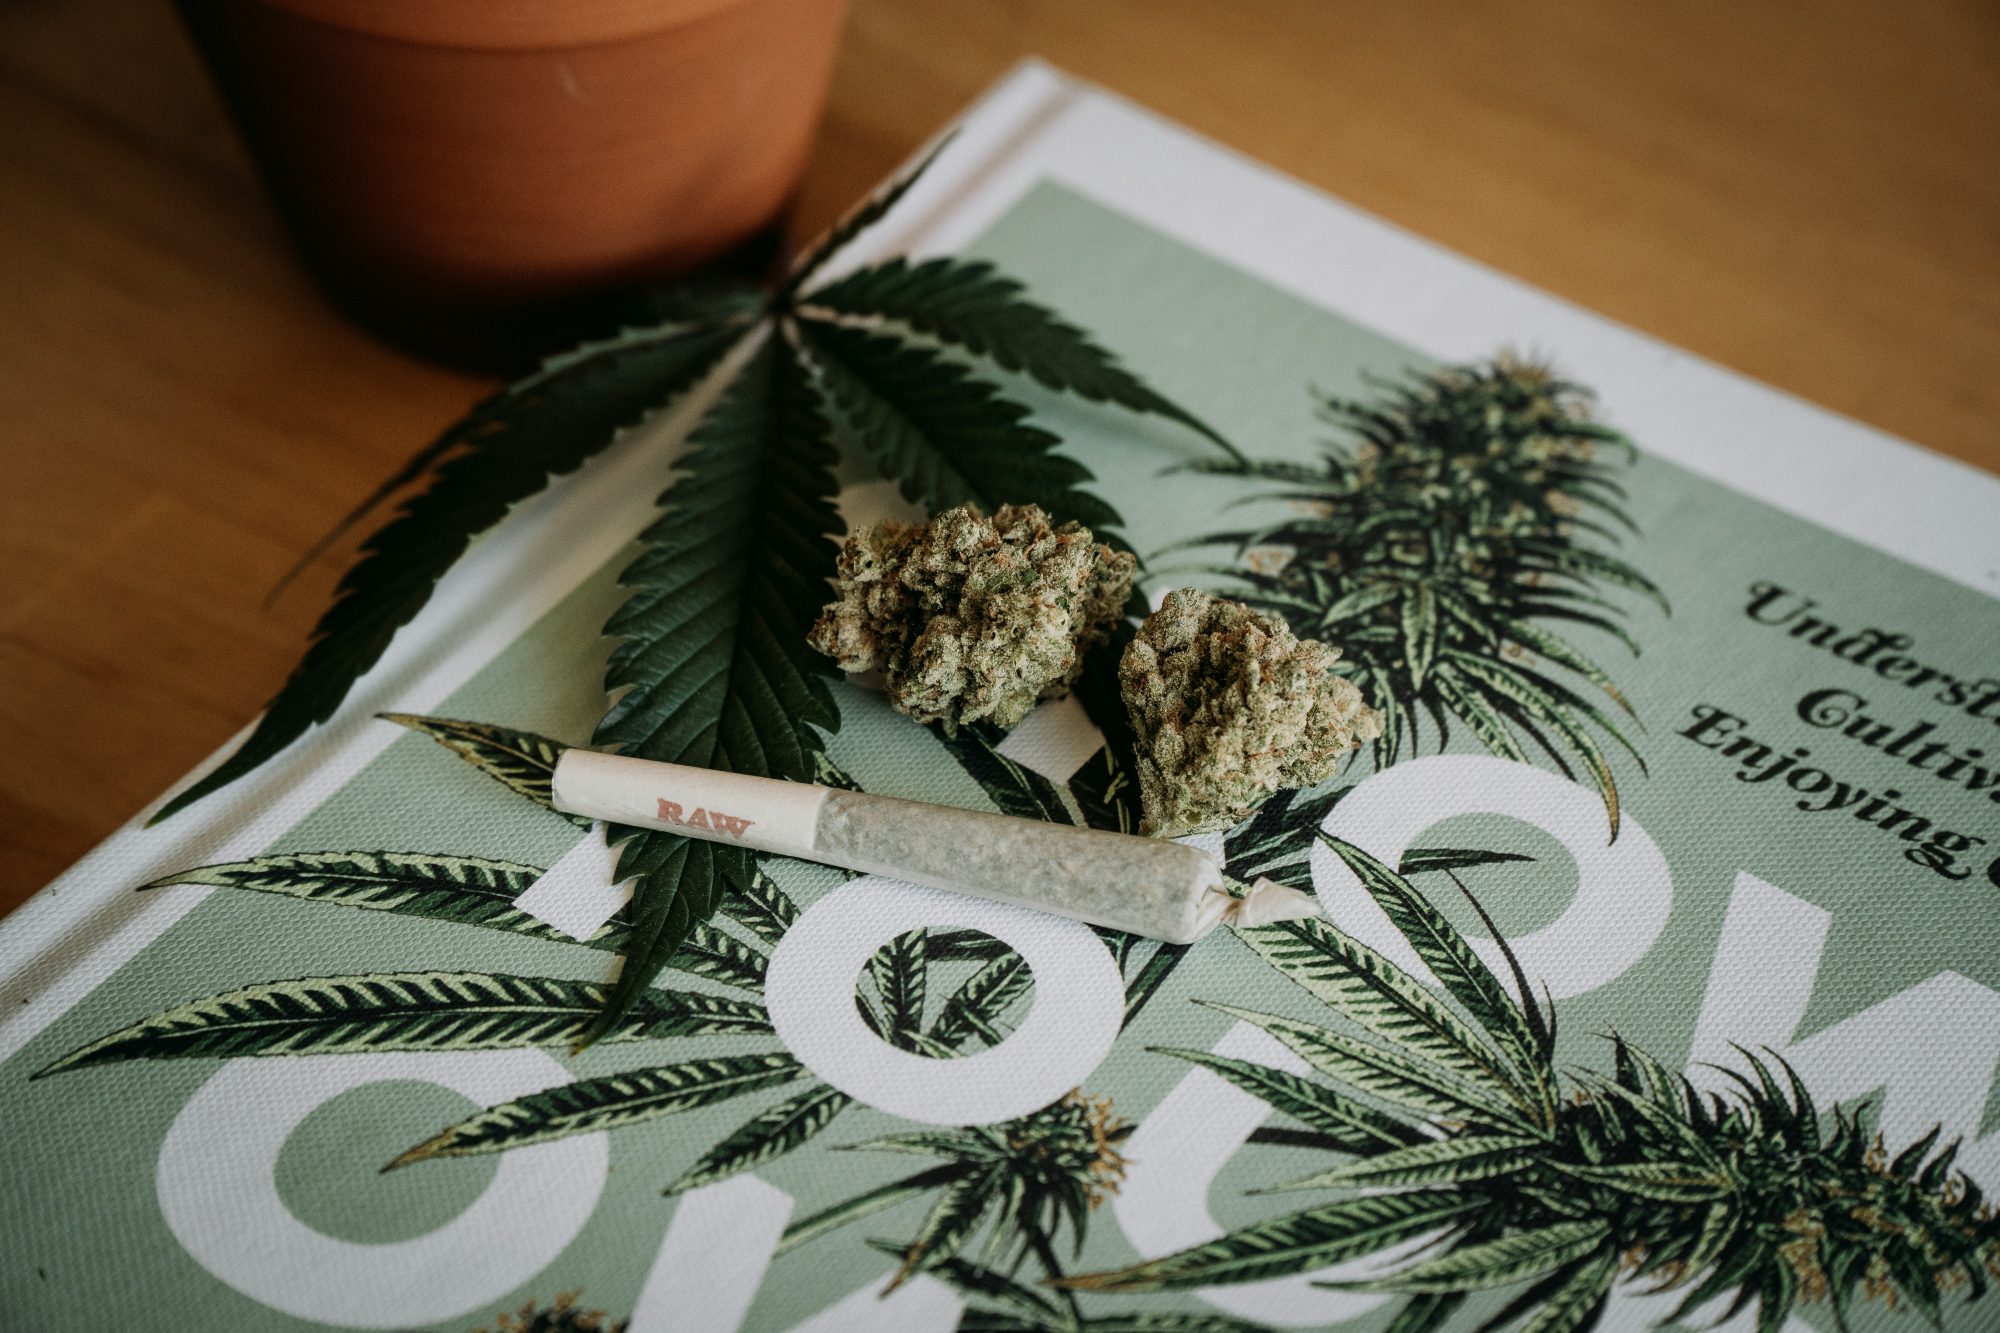 Rolled Joint - Cannabis Club Malta